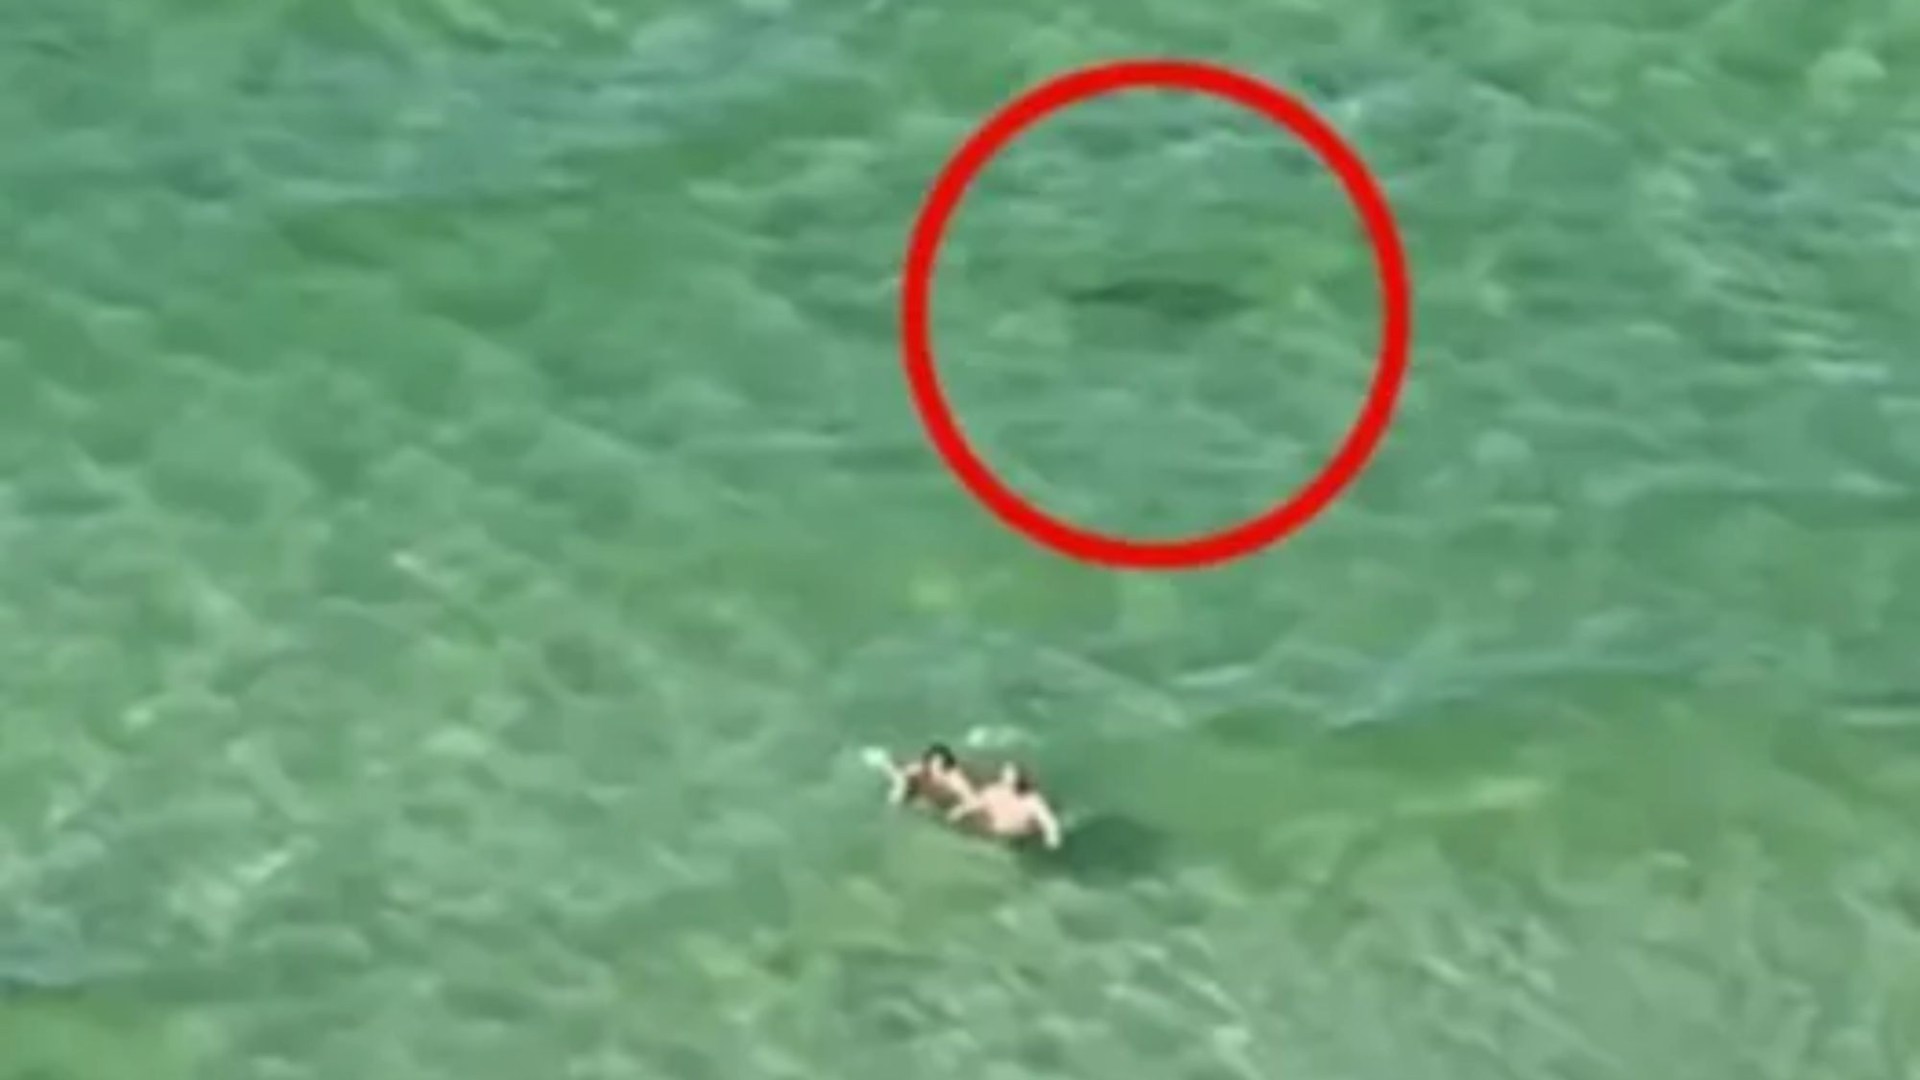 Horror moment tourists scream ‘SHARK’ at clueless swimmers as predator circles them off Florida beach [Video]